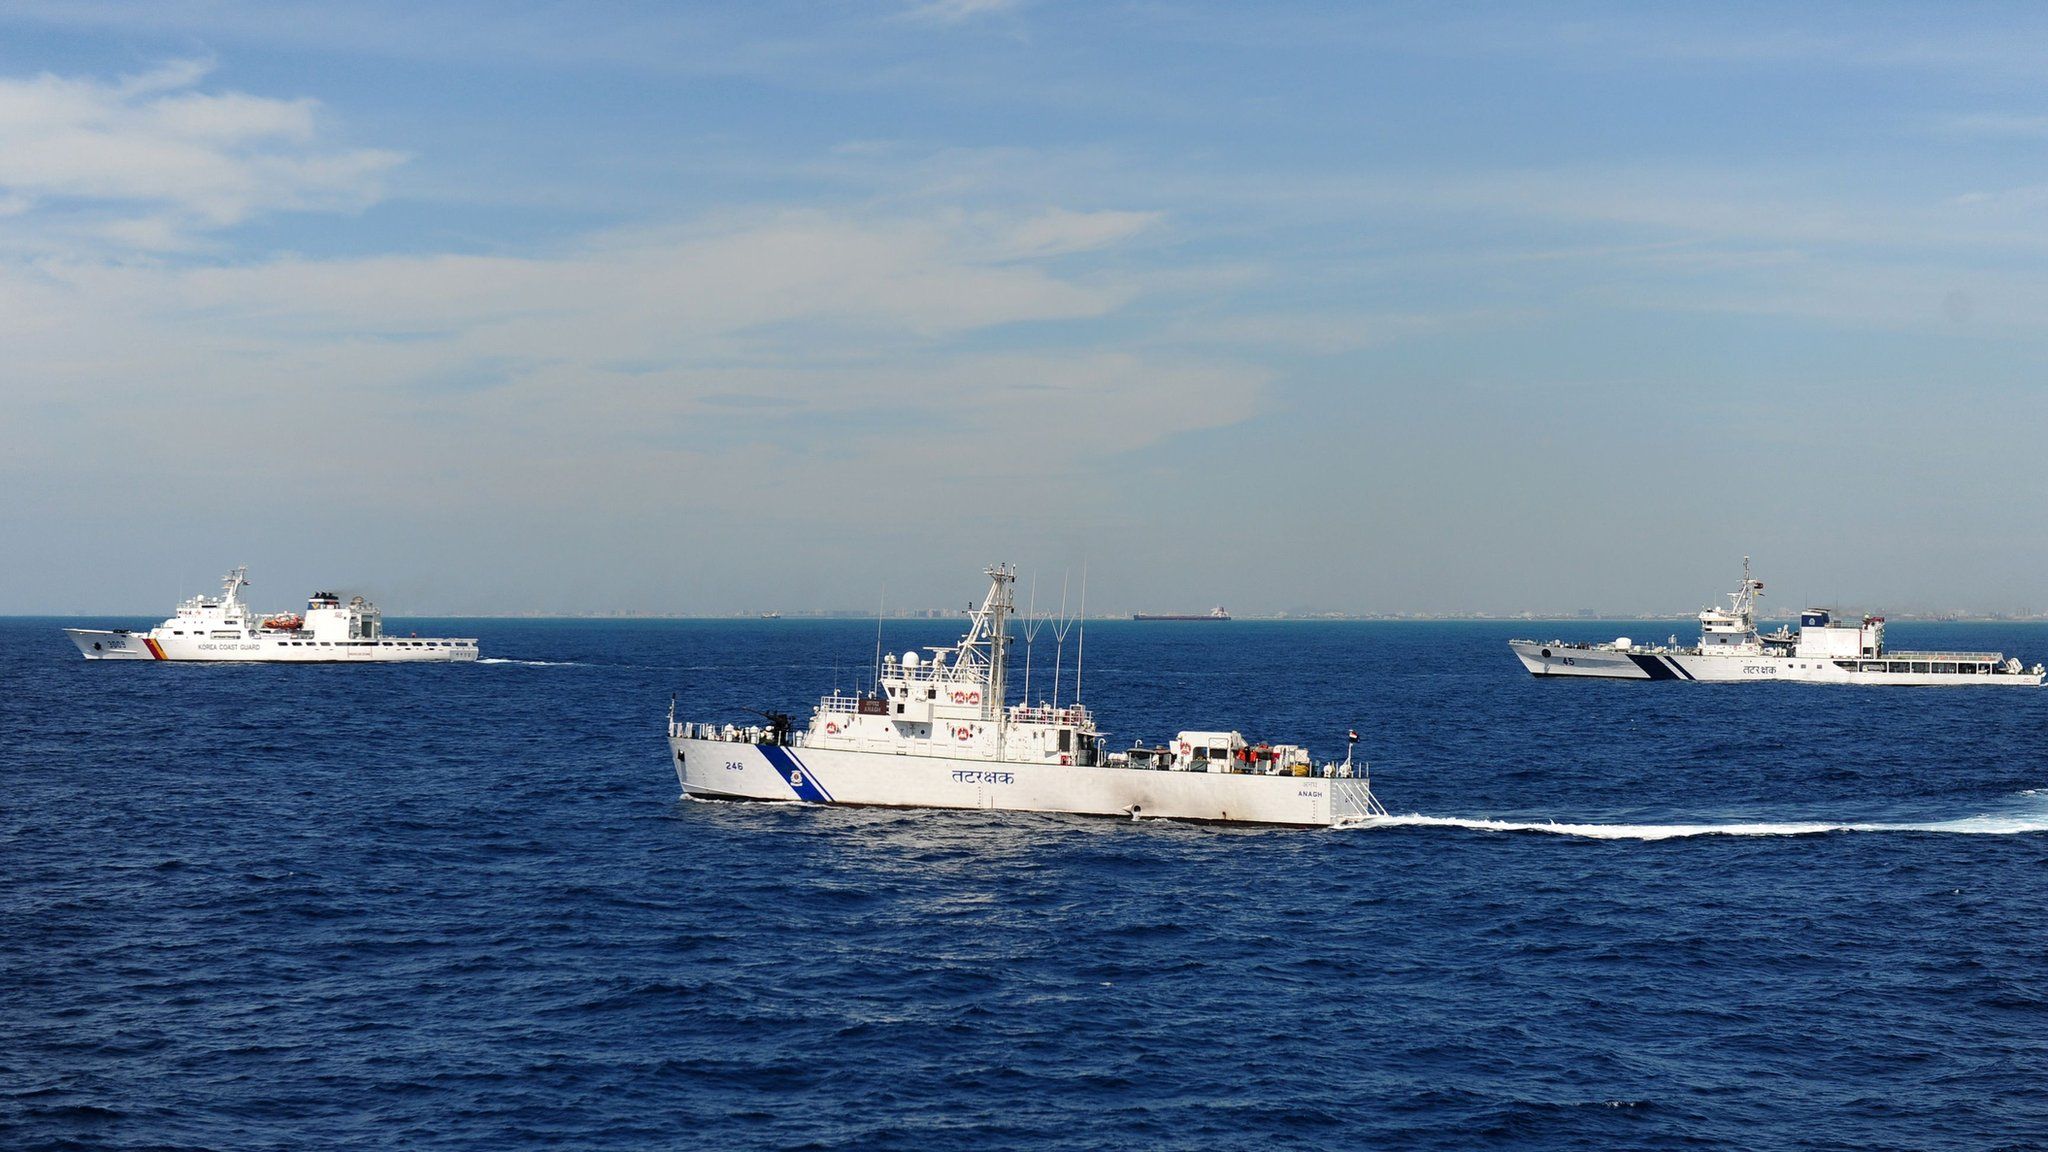 File photo showing Indian coastguard ships